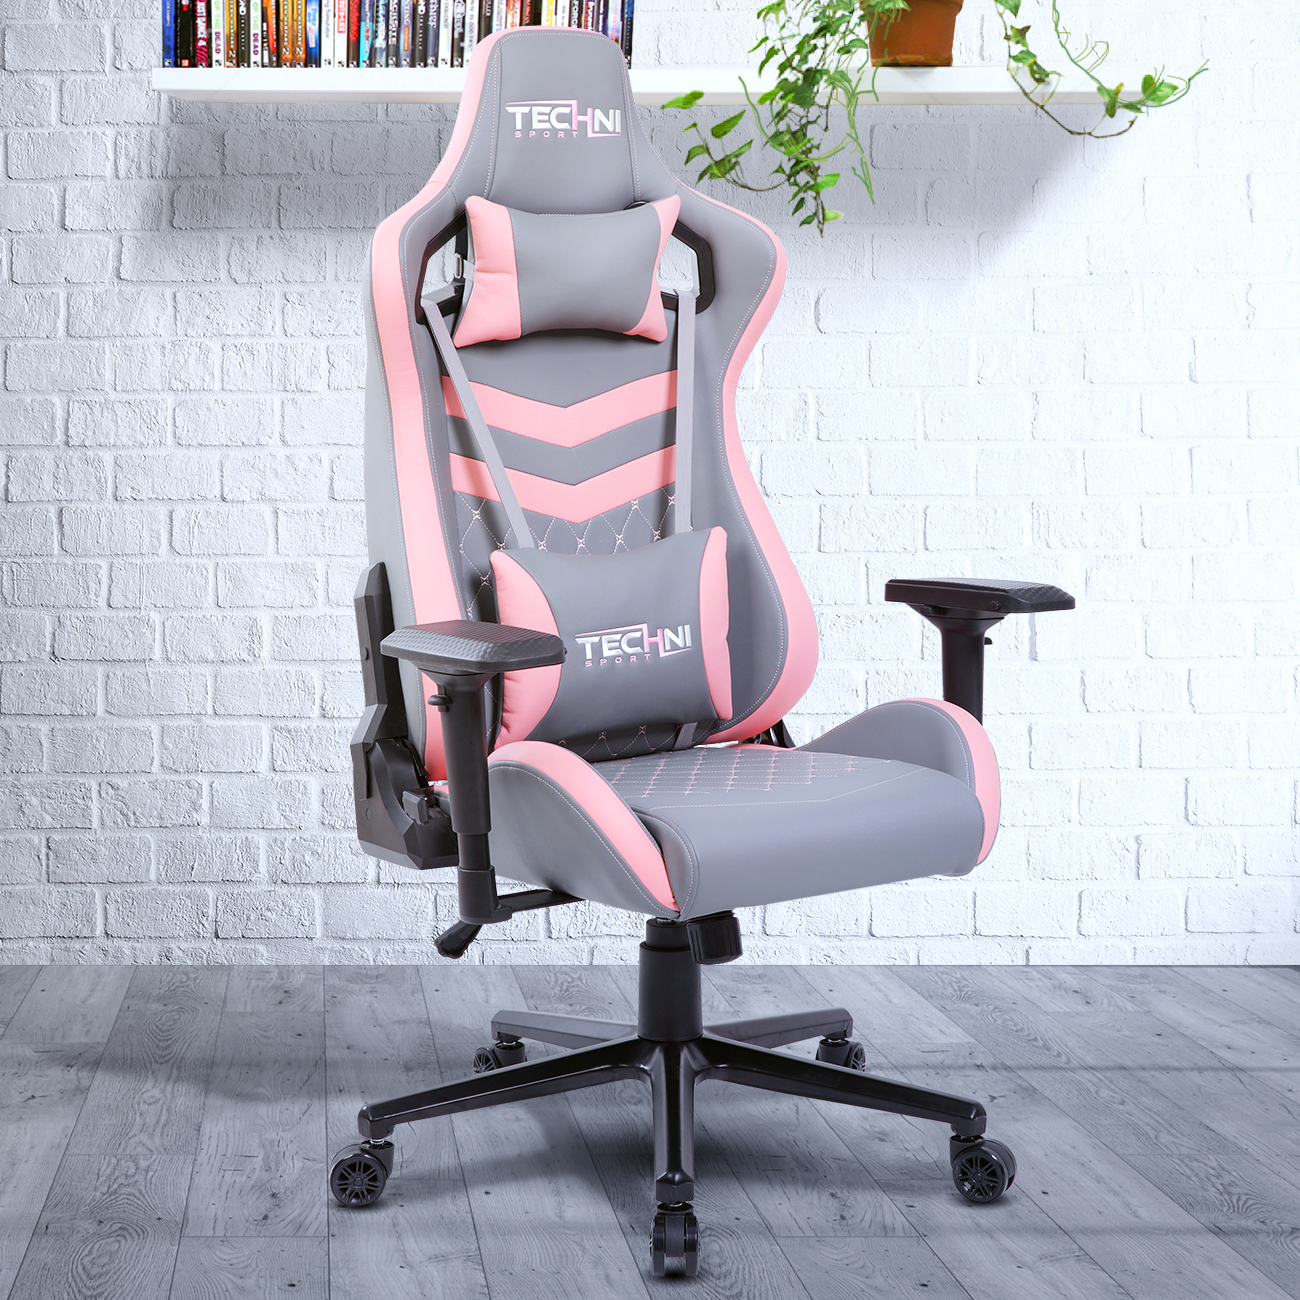 Techni Sport TS-83 Ergonomic High Back Racer Style PC Gaming Chair, Grey/Pink-CASAINC